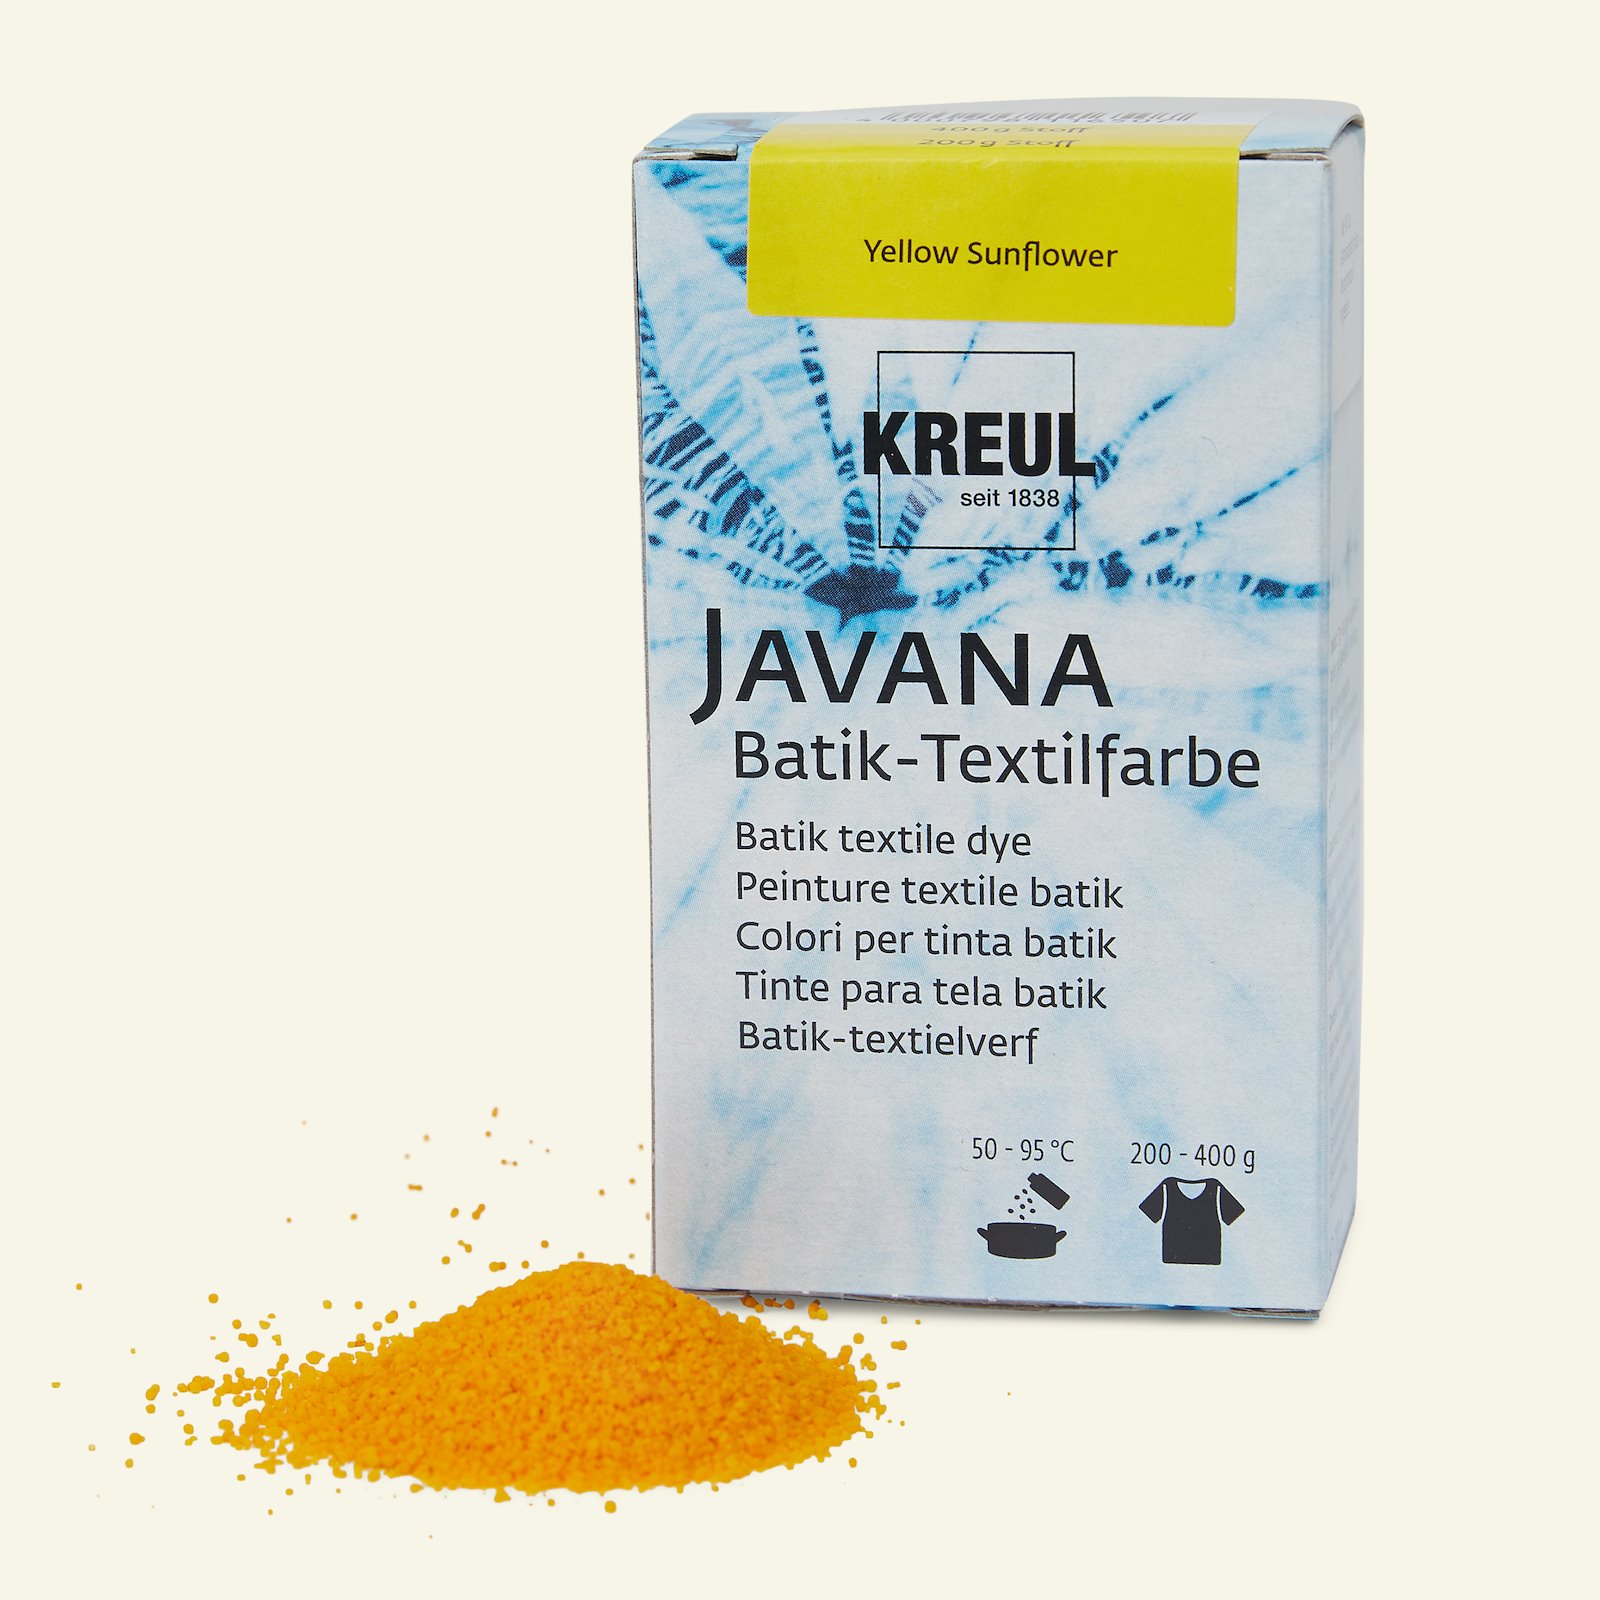 Javana batikkfarge, gul, 70g 29657_pack